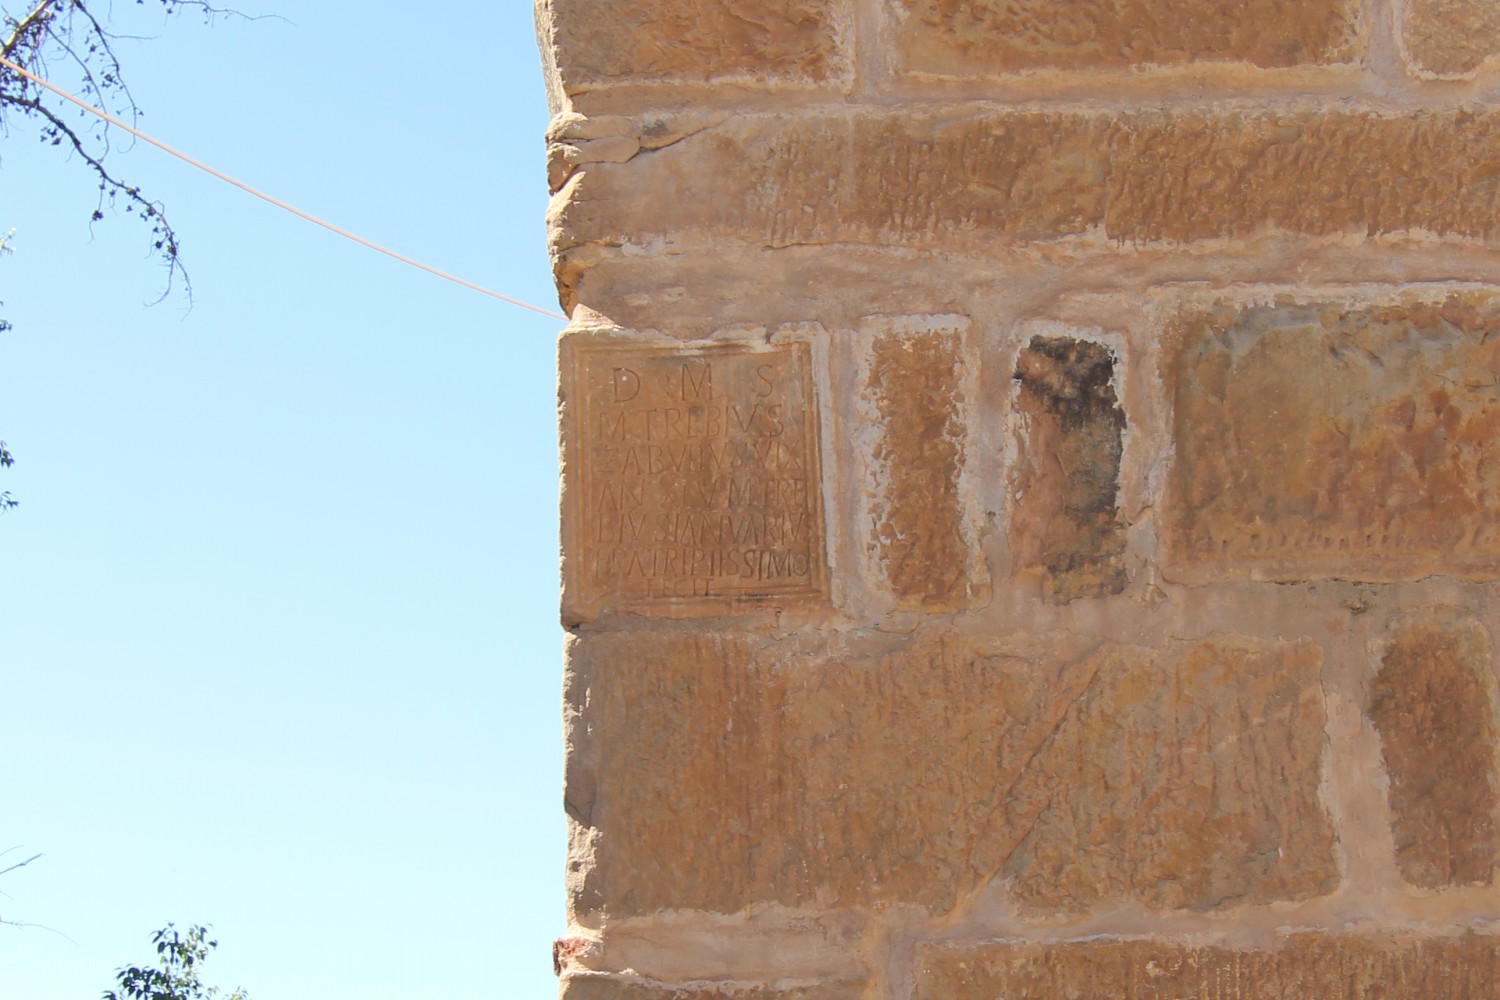 Latin inscriptions on the base of the minaret